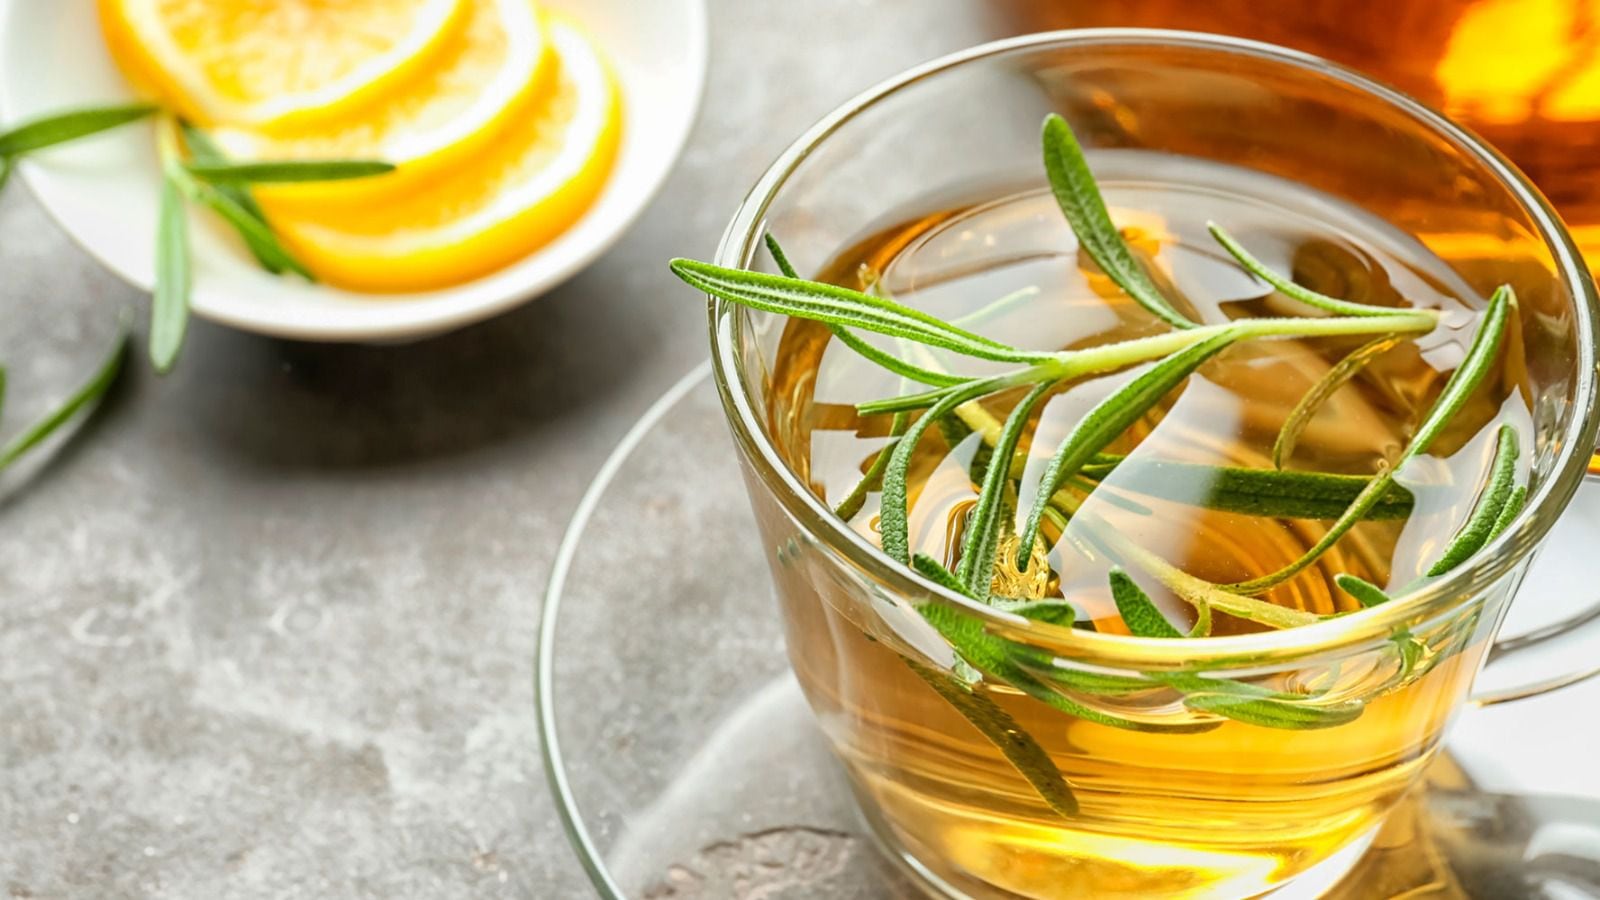 En ocasiones, el limón acompaña al té de romero. (Foto: Shutterstock)